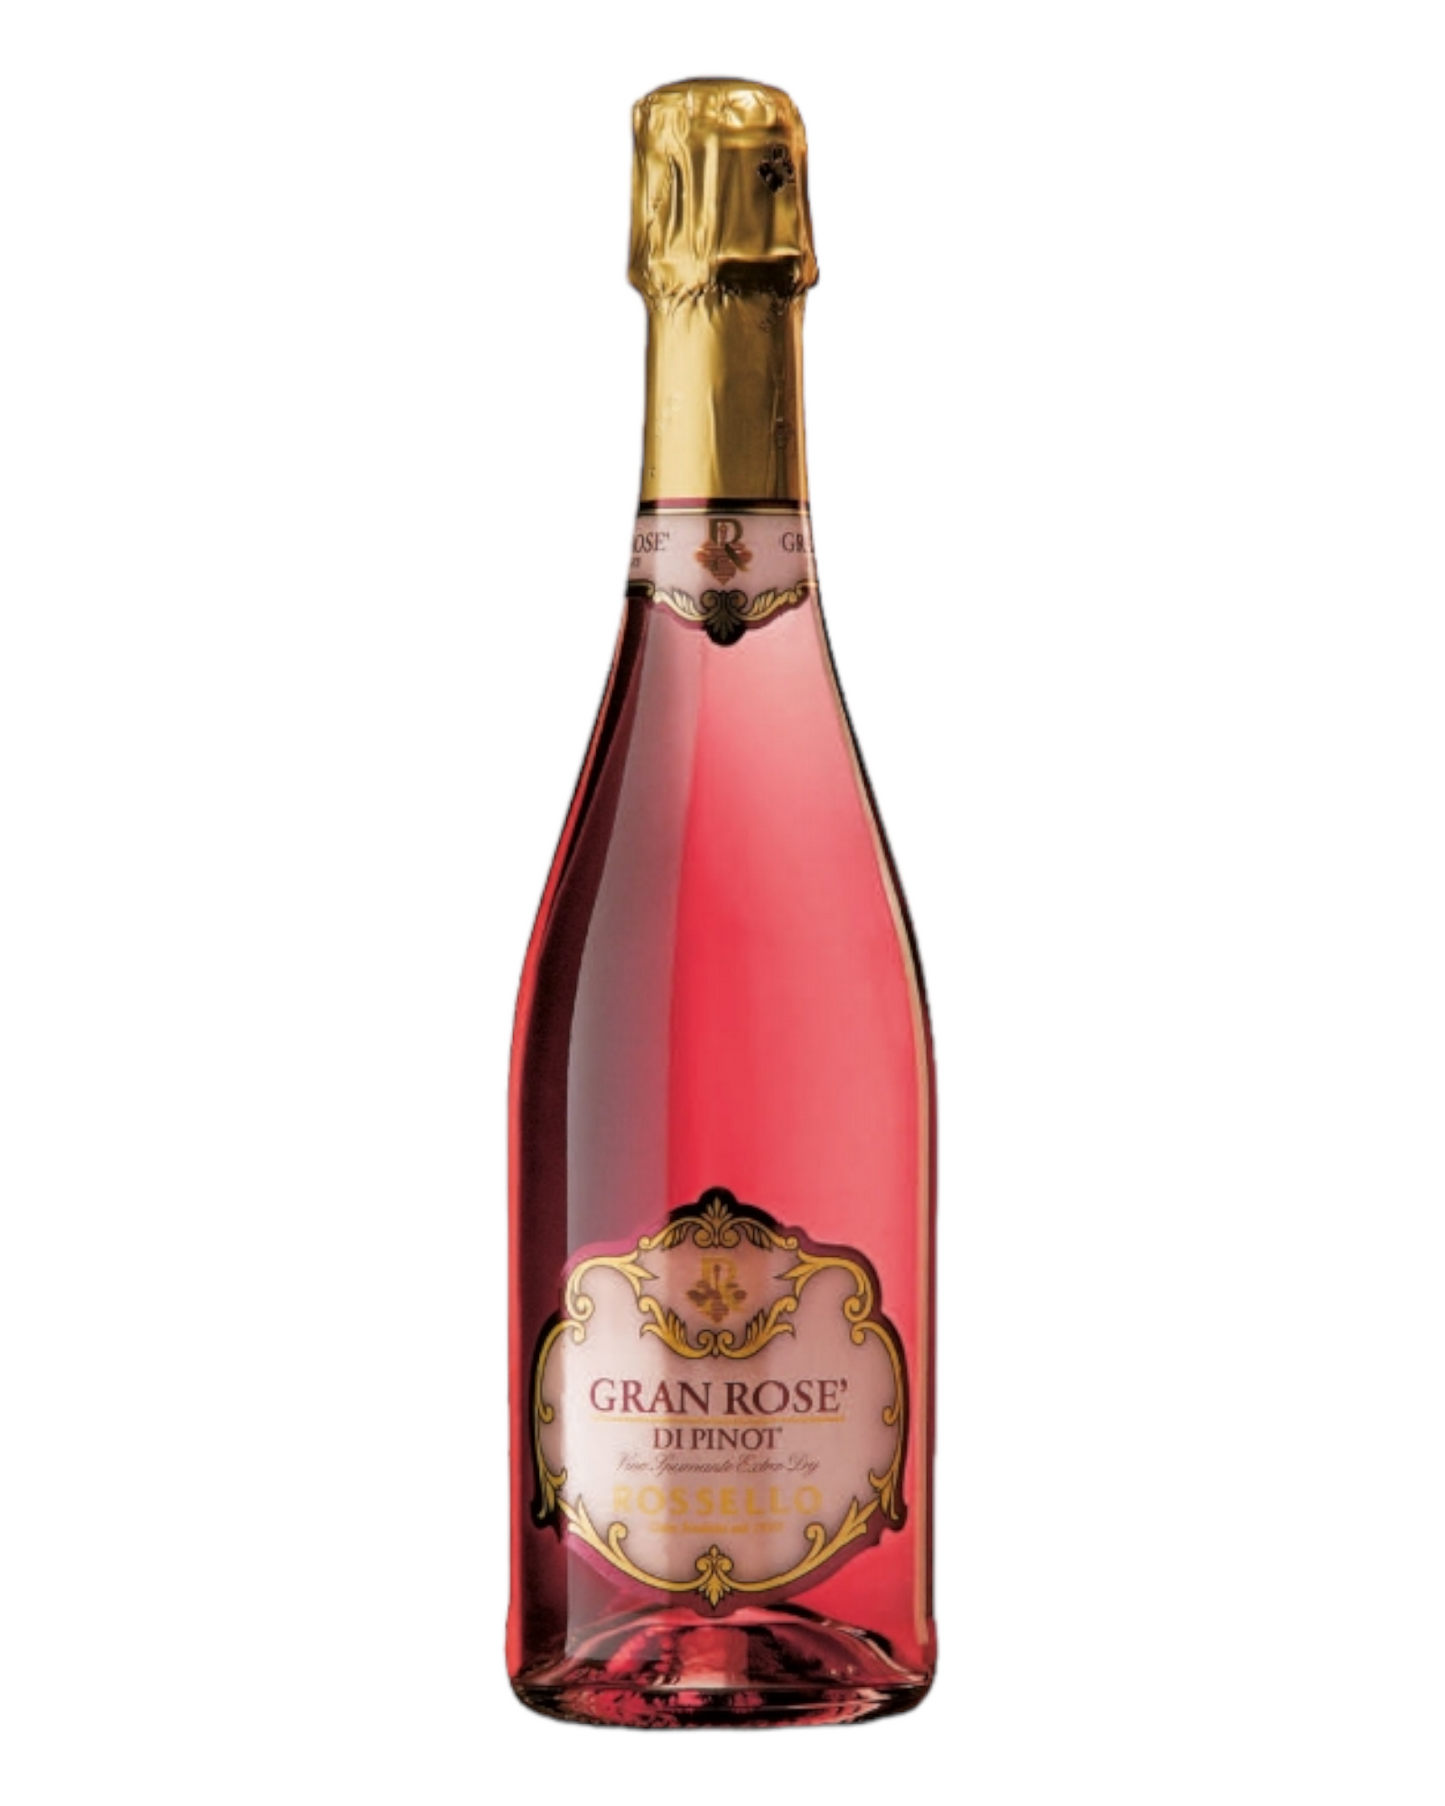 Gran Rosé di Pinot - Rossello Vini